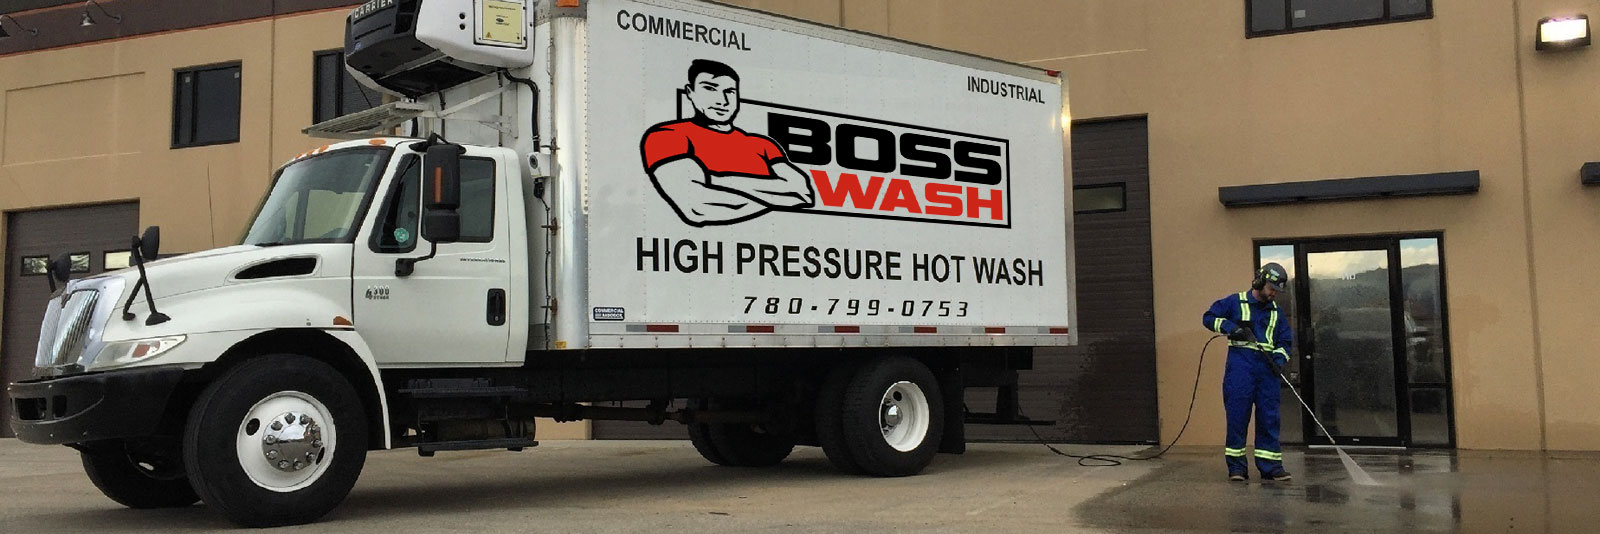 the BOSSWASH pressure washer truck